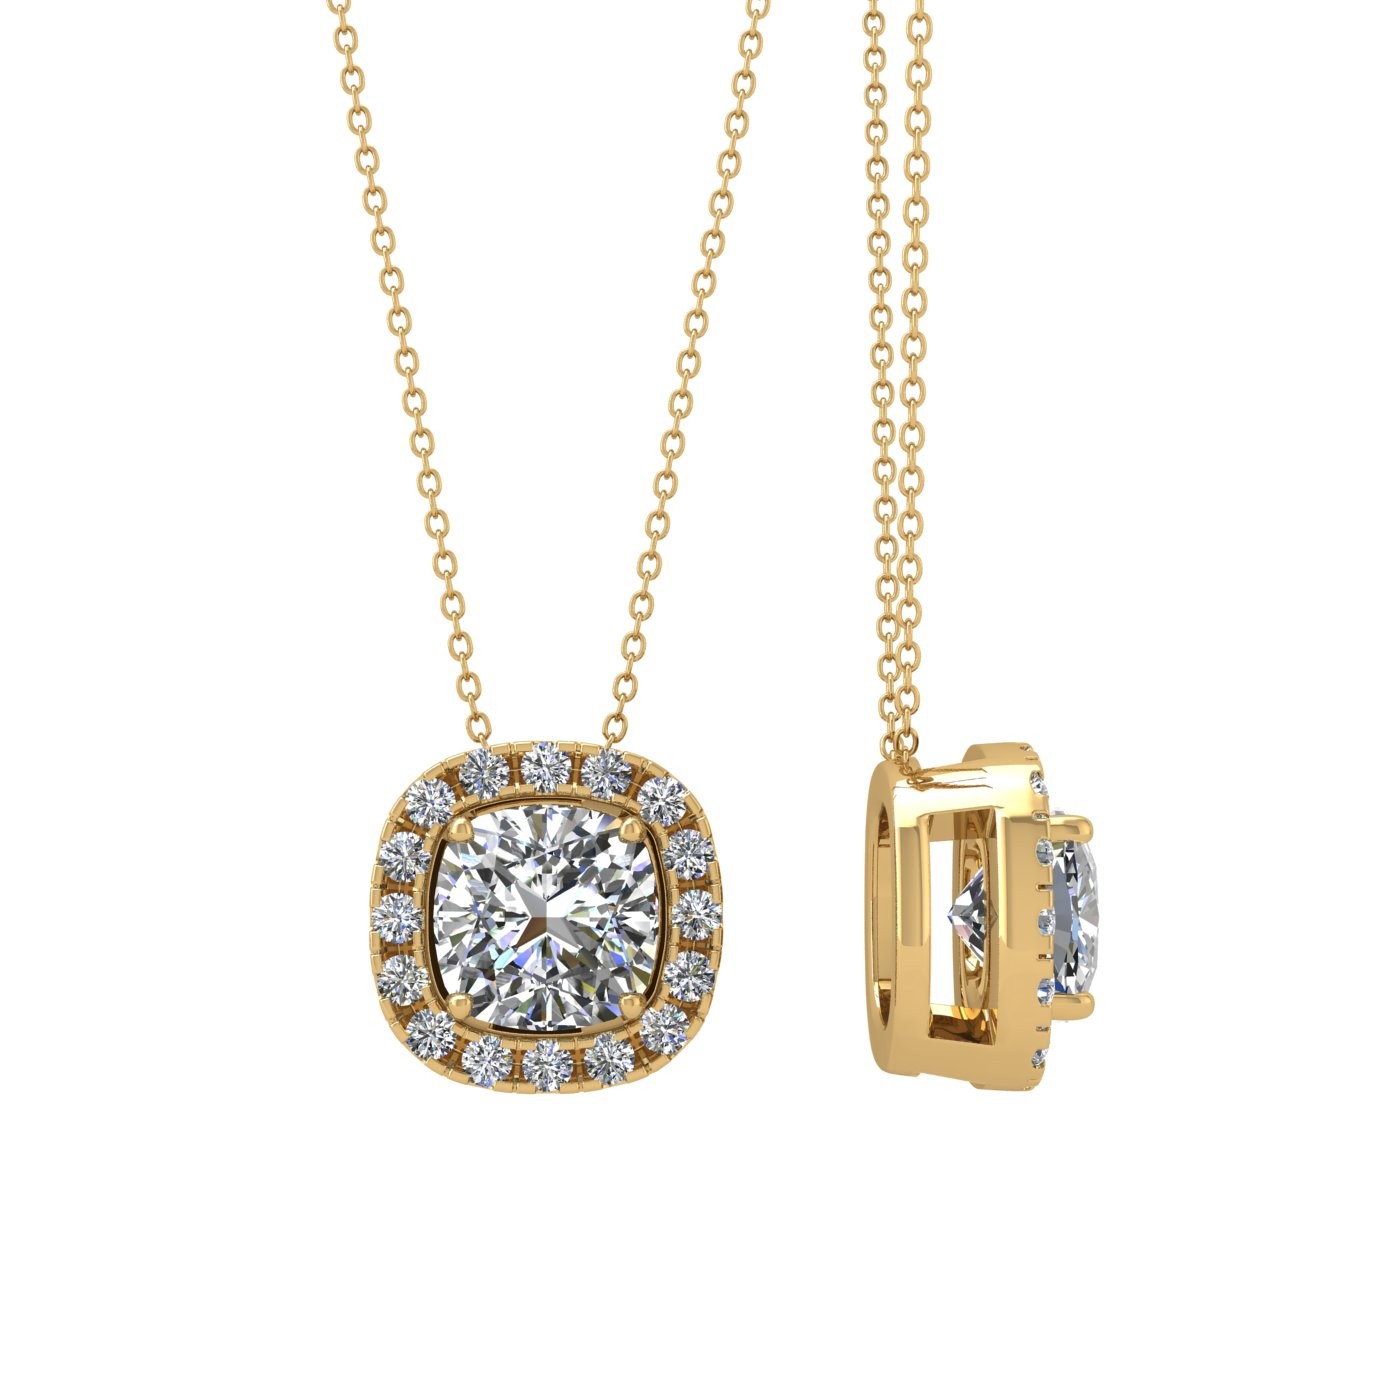 18k yellow gold  0,7 ct 4 prongs cushion shape diamond pendant with diamond pavÉ set halo